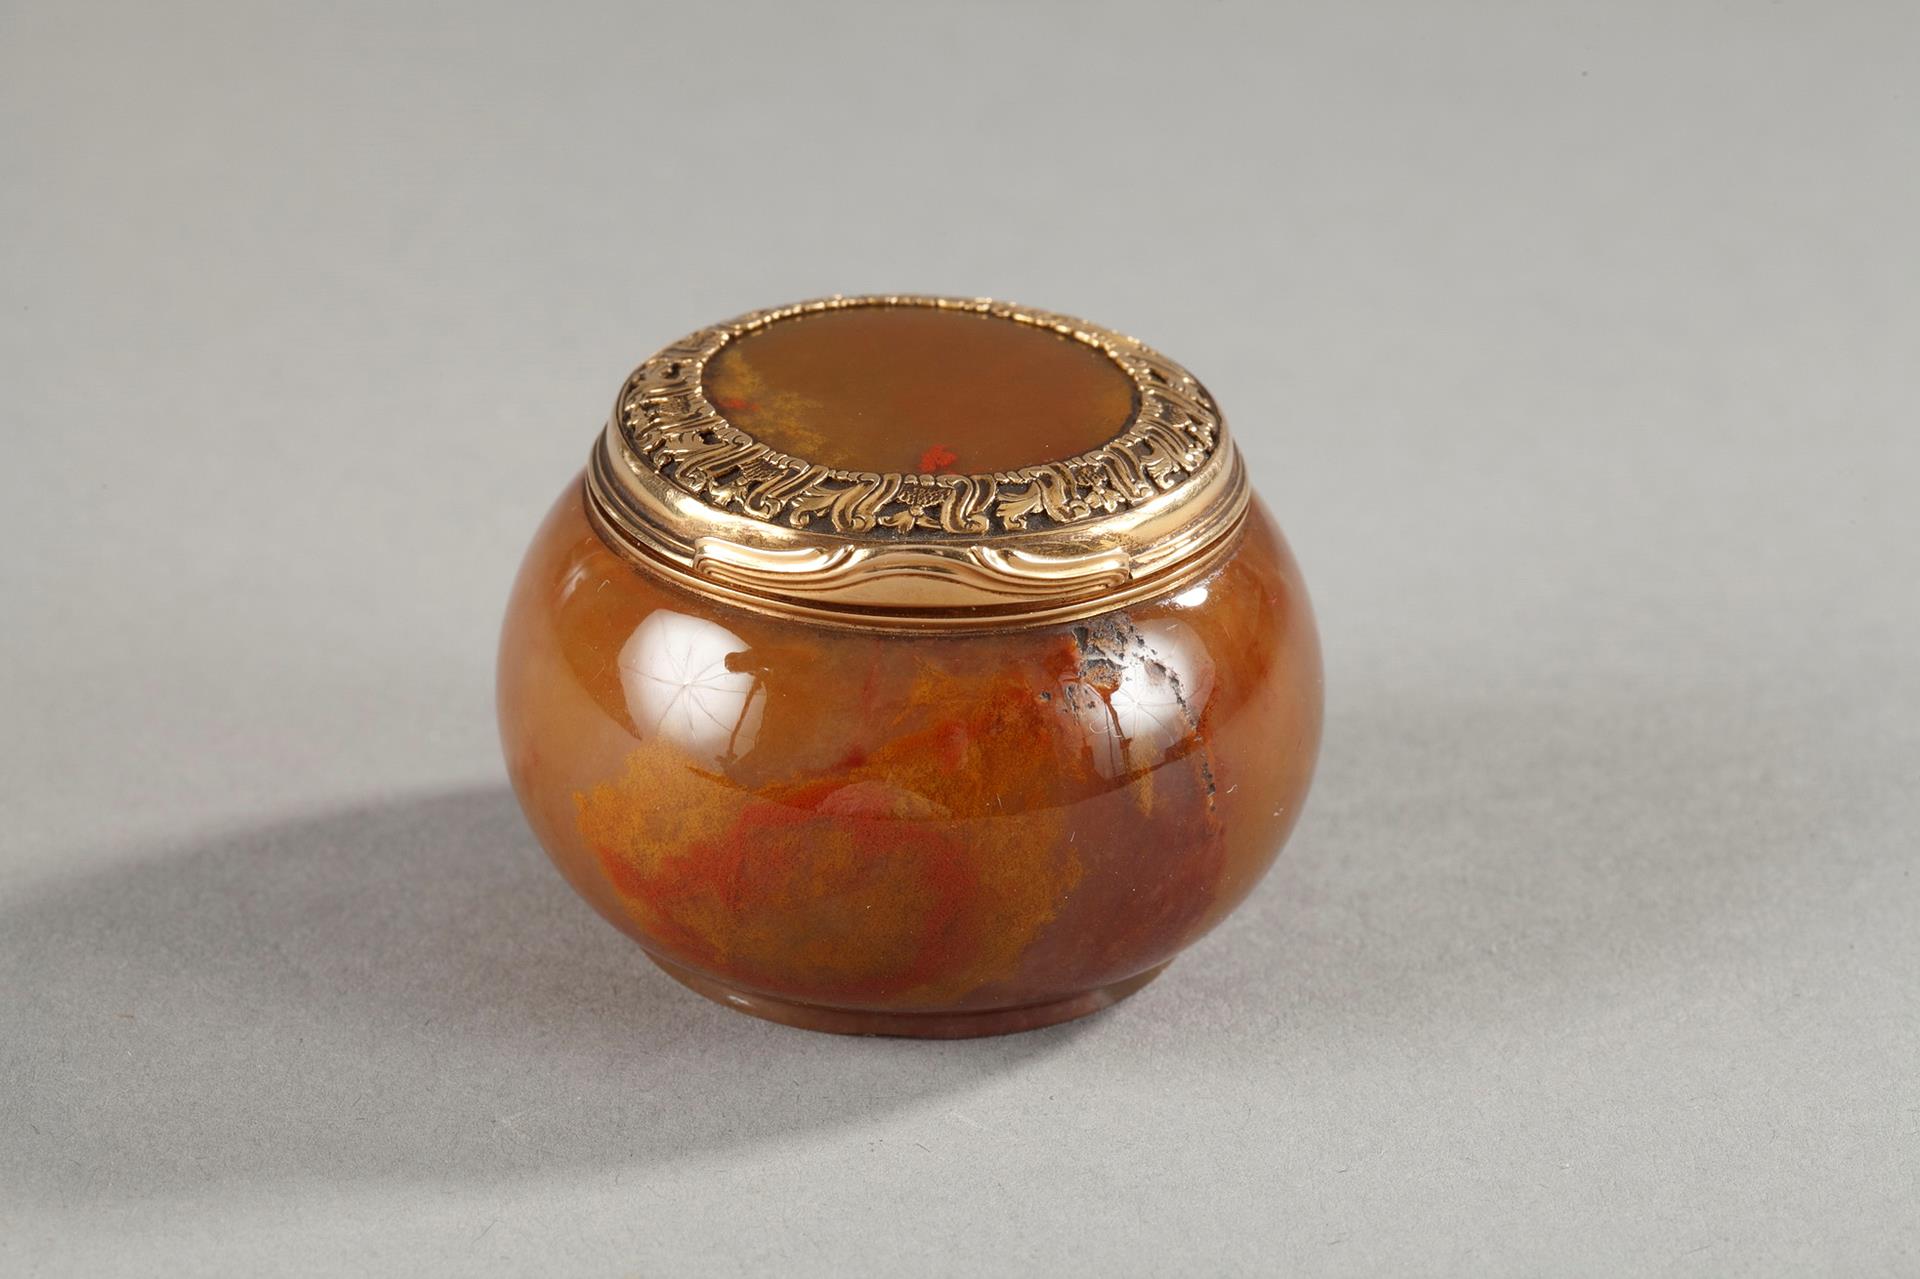 English 18th century gold-mounted agate snuff-box.